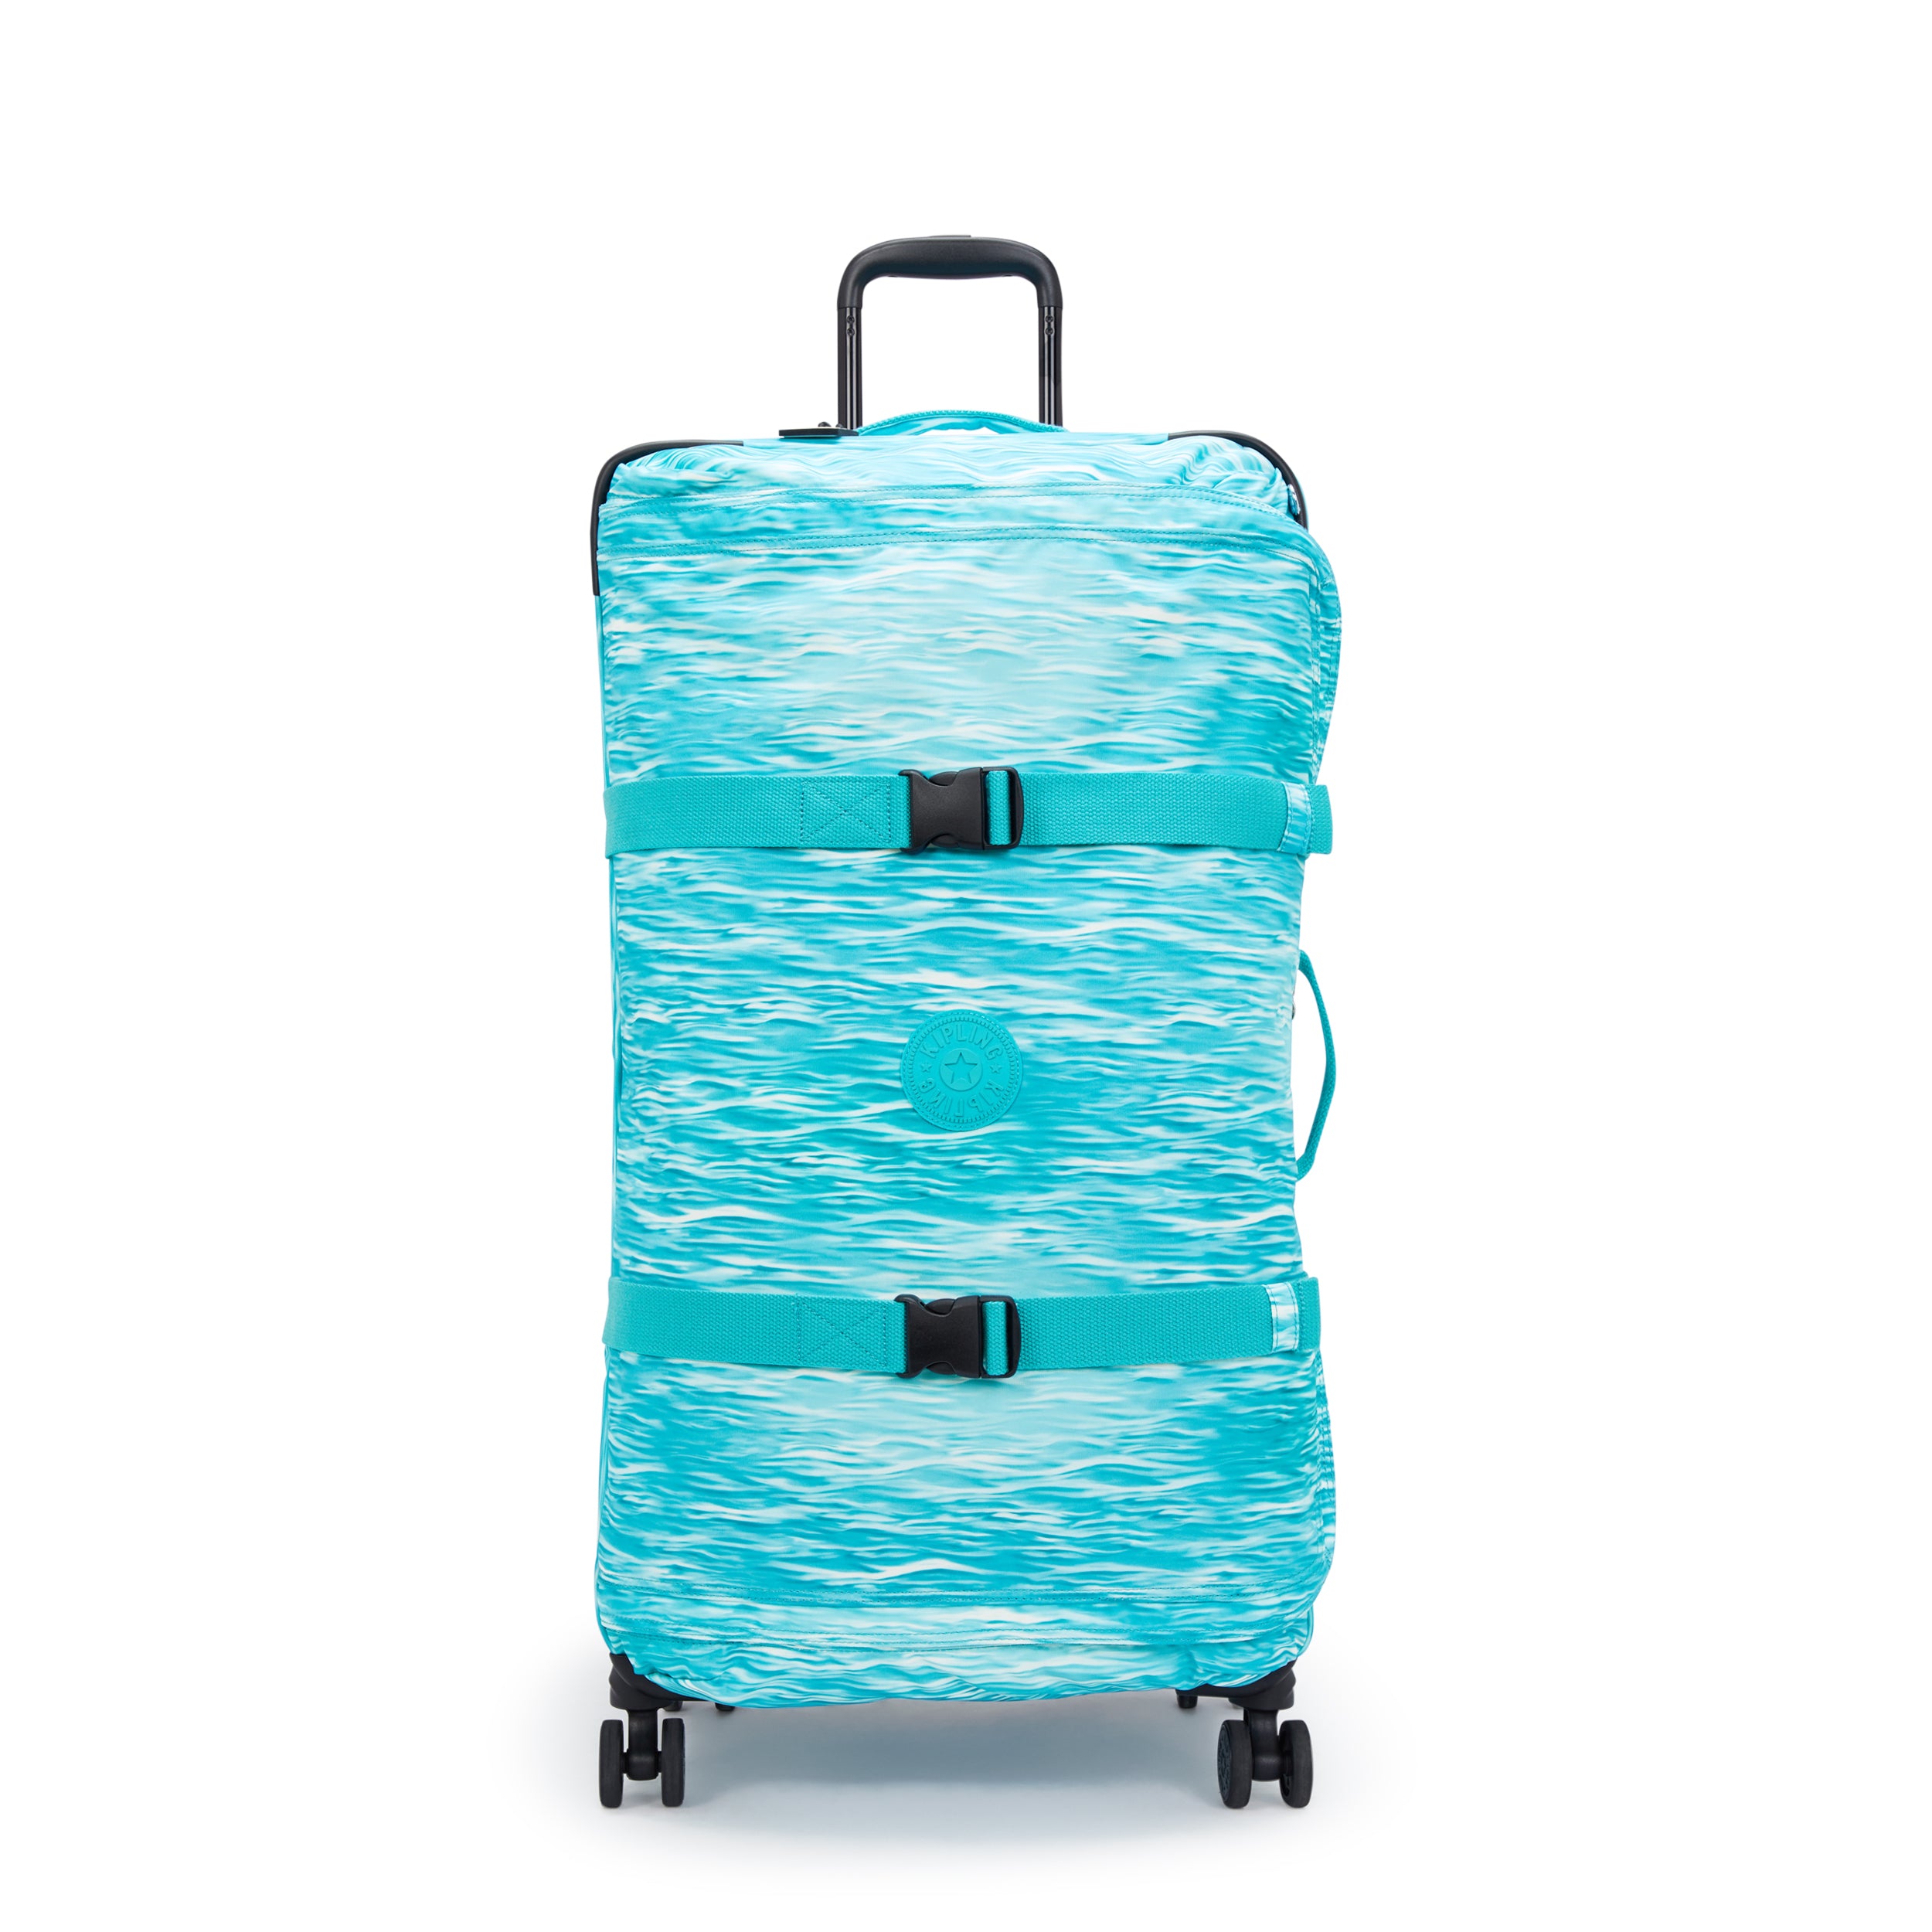 KIPLING-Spontaneous L-Large wheeled luggage-Aqua Pool-I3397-5MF